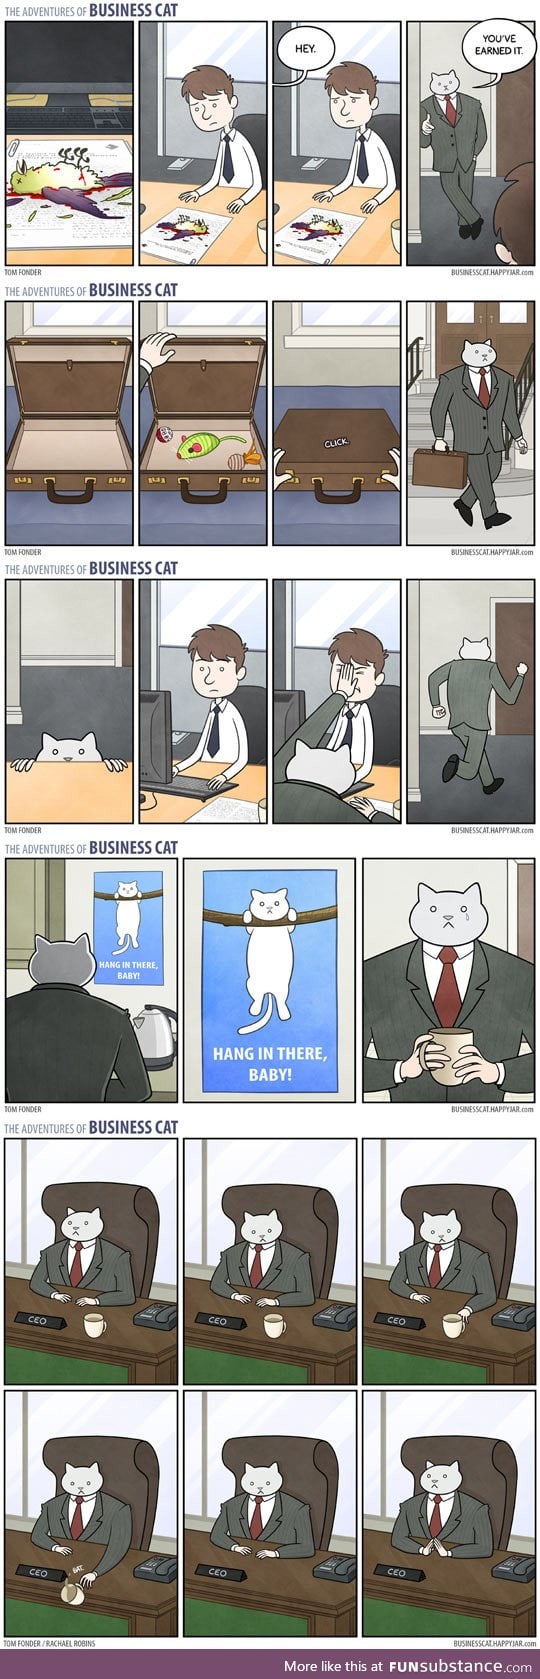 Best of business cat